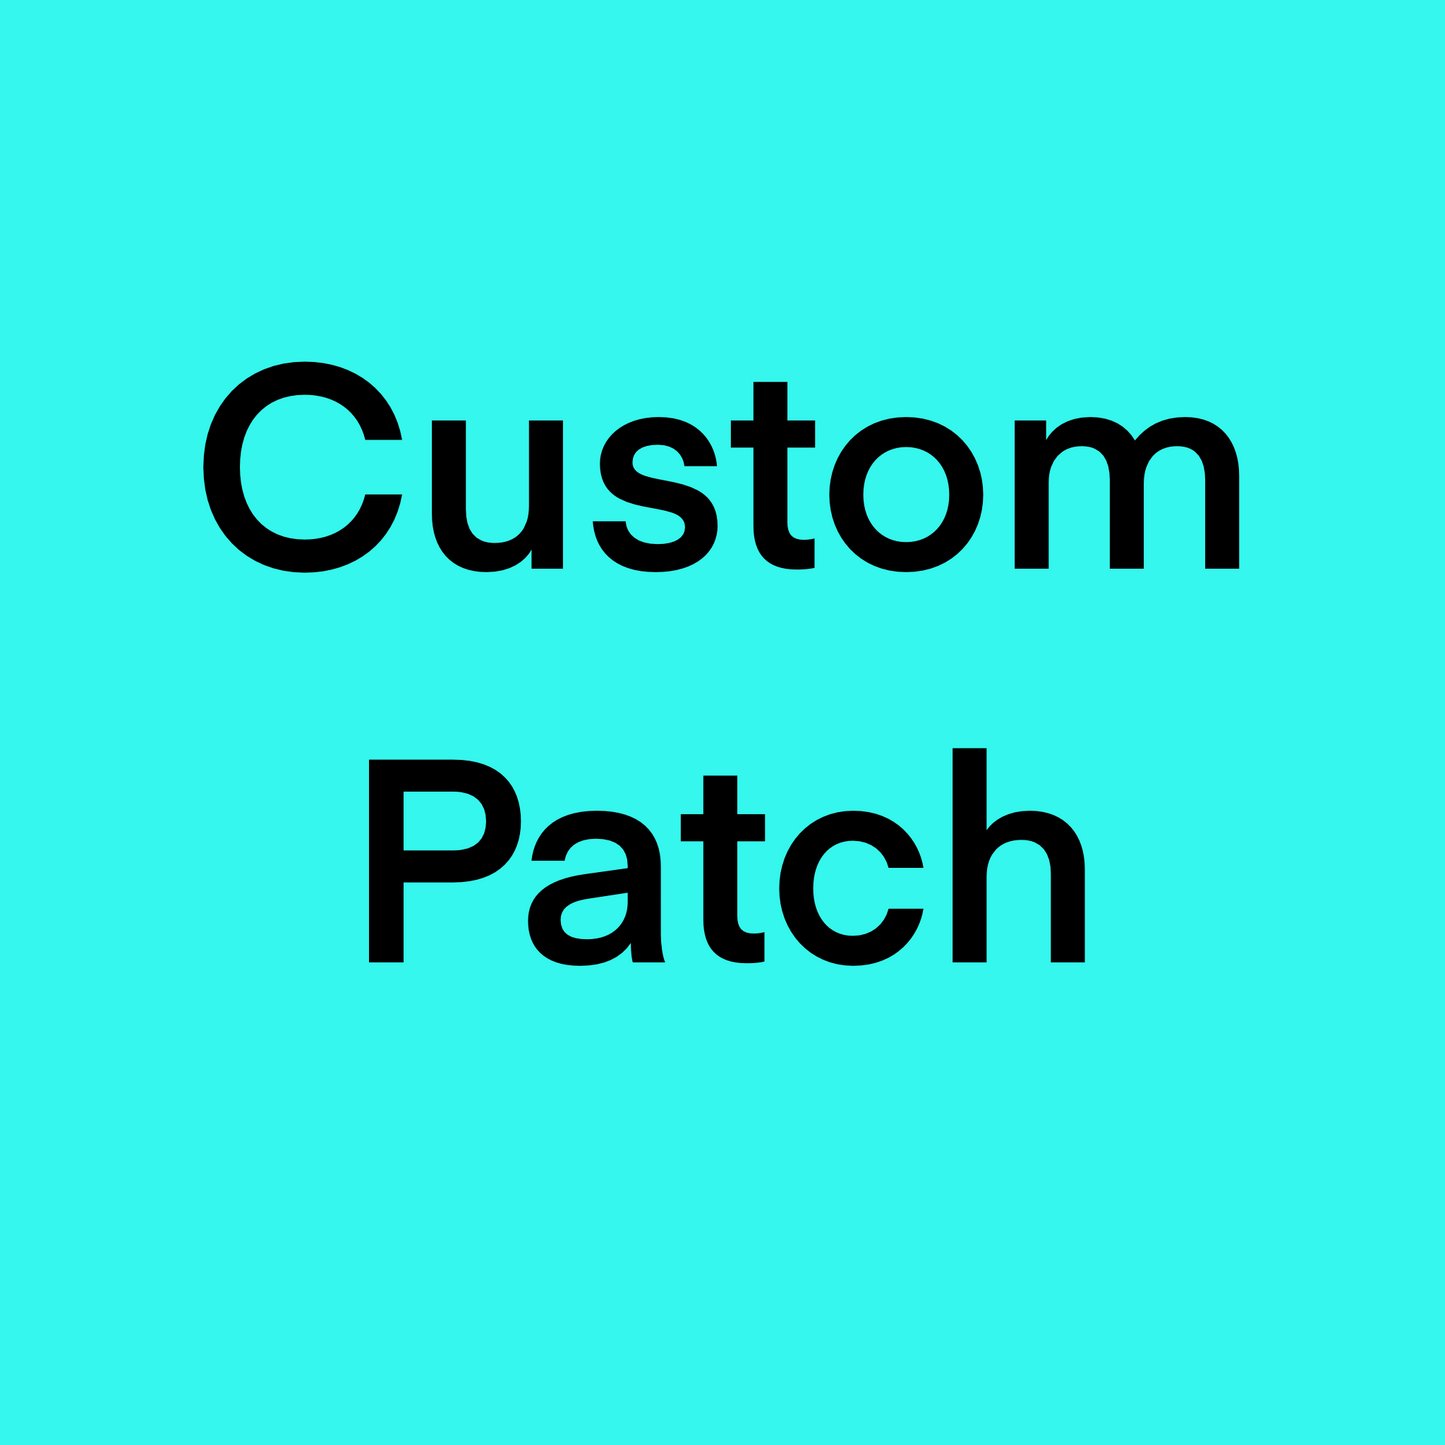 Custom patch